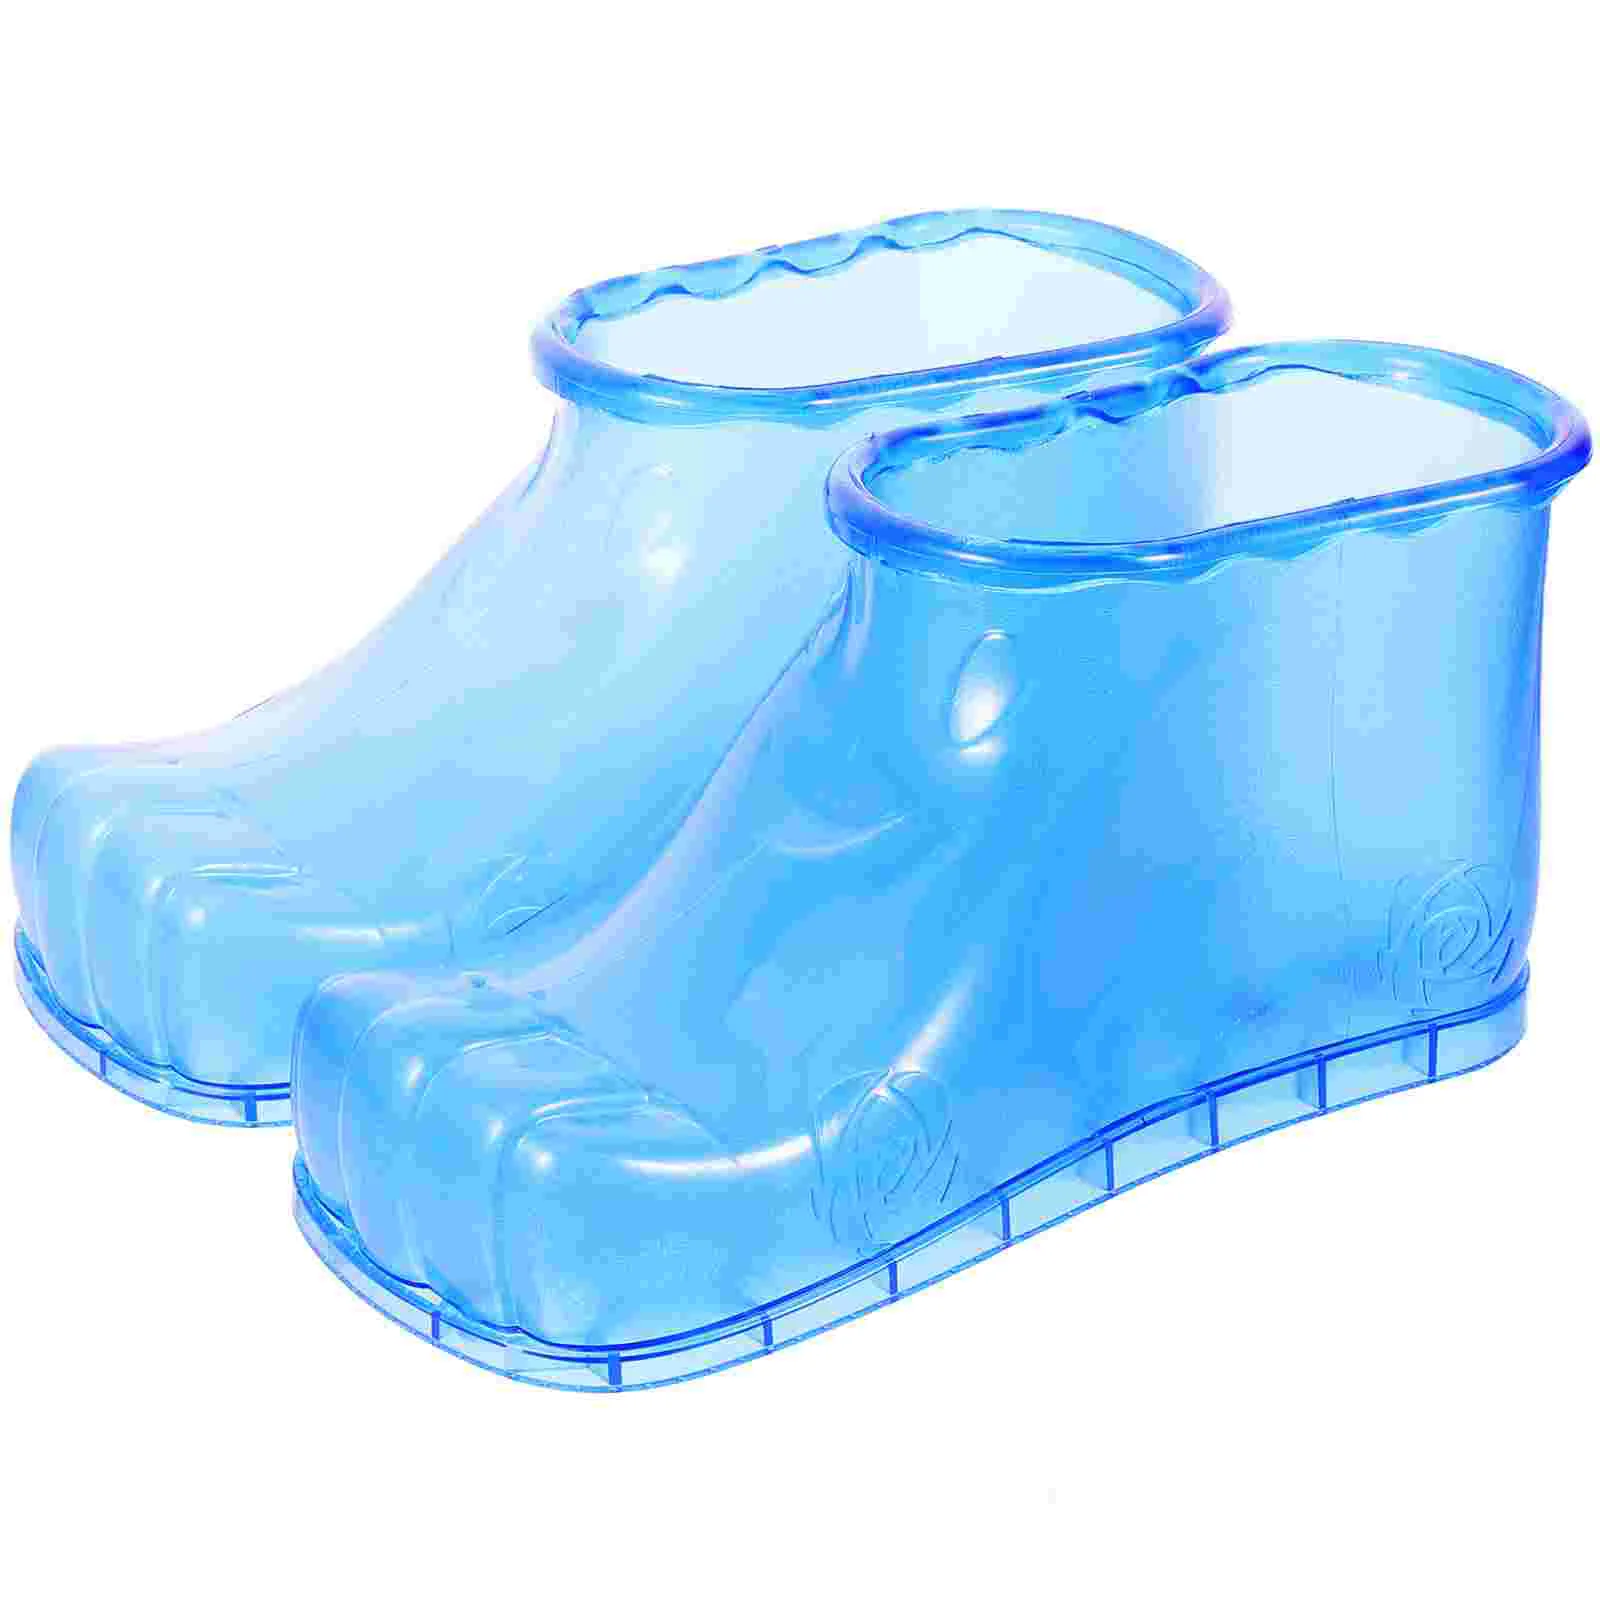 

Plastic Tub Foot Soaker Shoes Bucket Soaking Feet Take Bath Pedicure Spa Massage